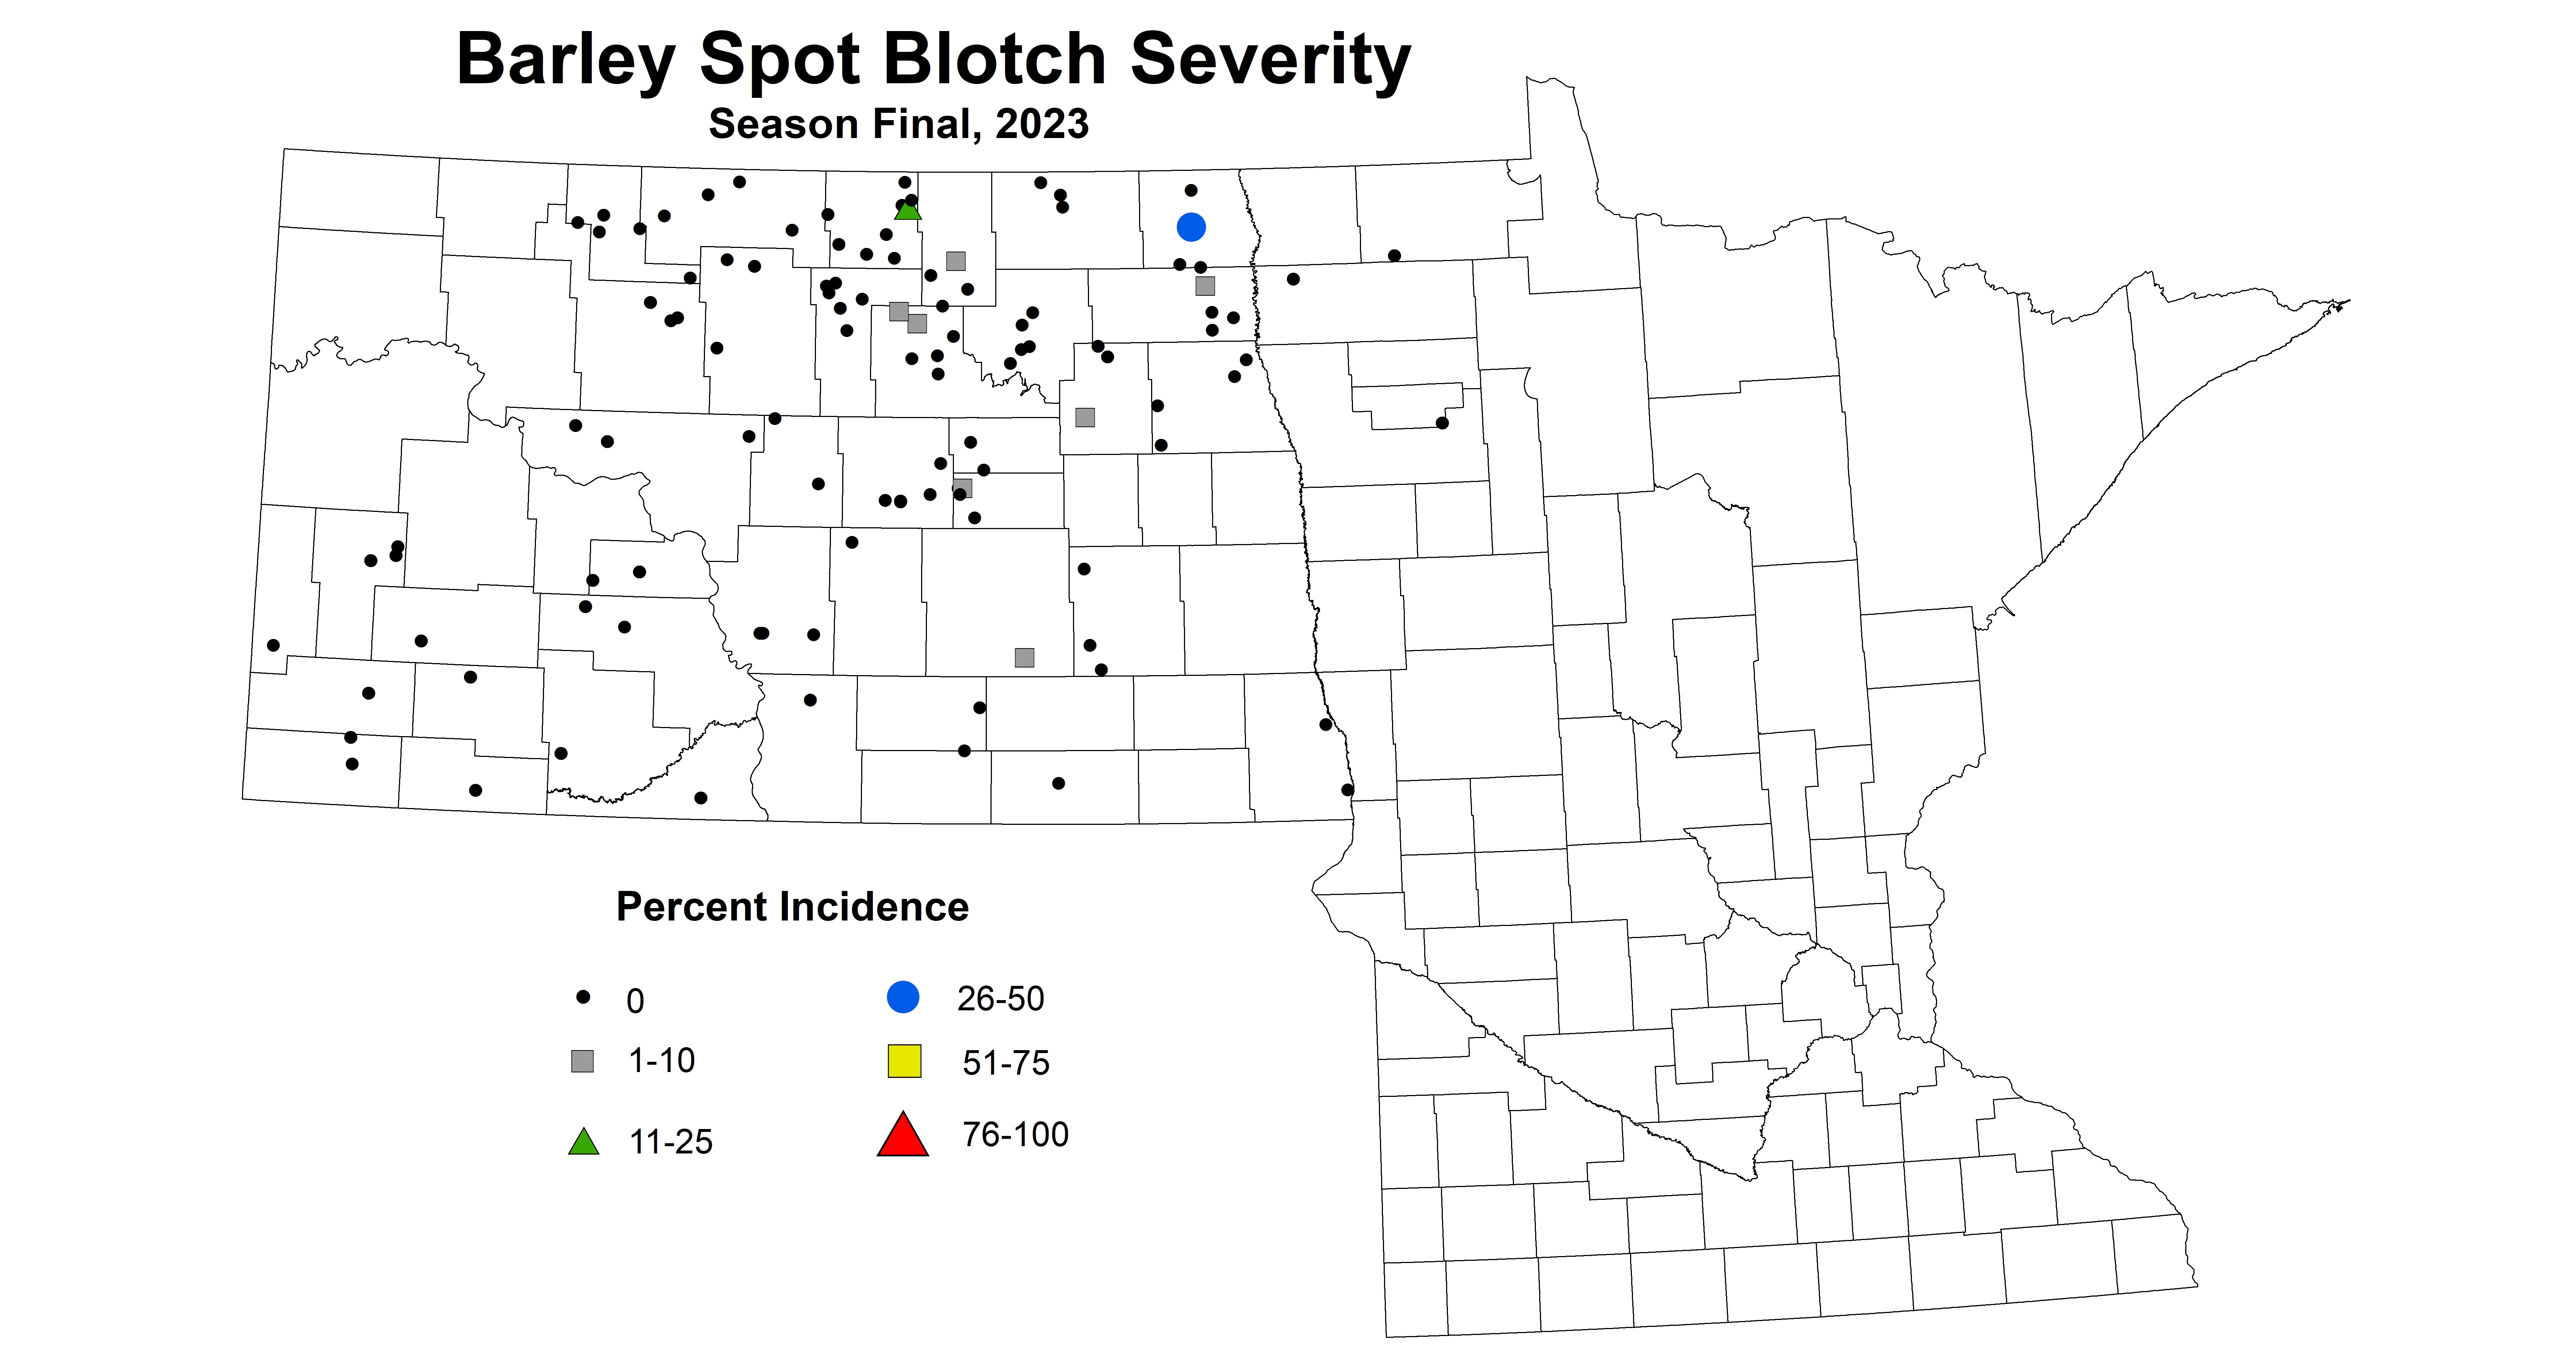 barley spot blotch severity season final 2023